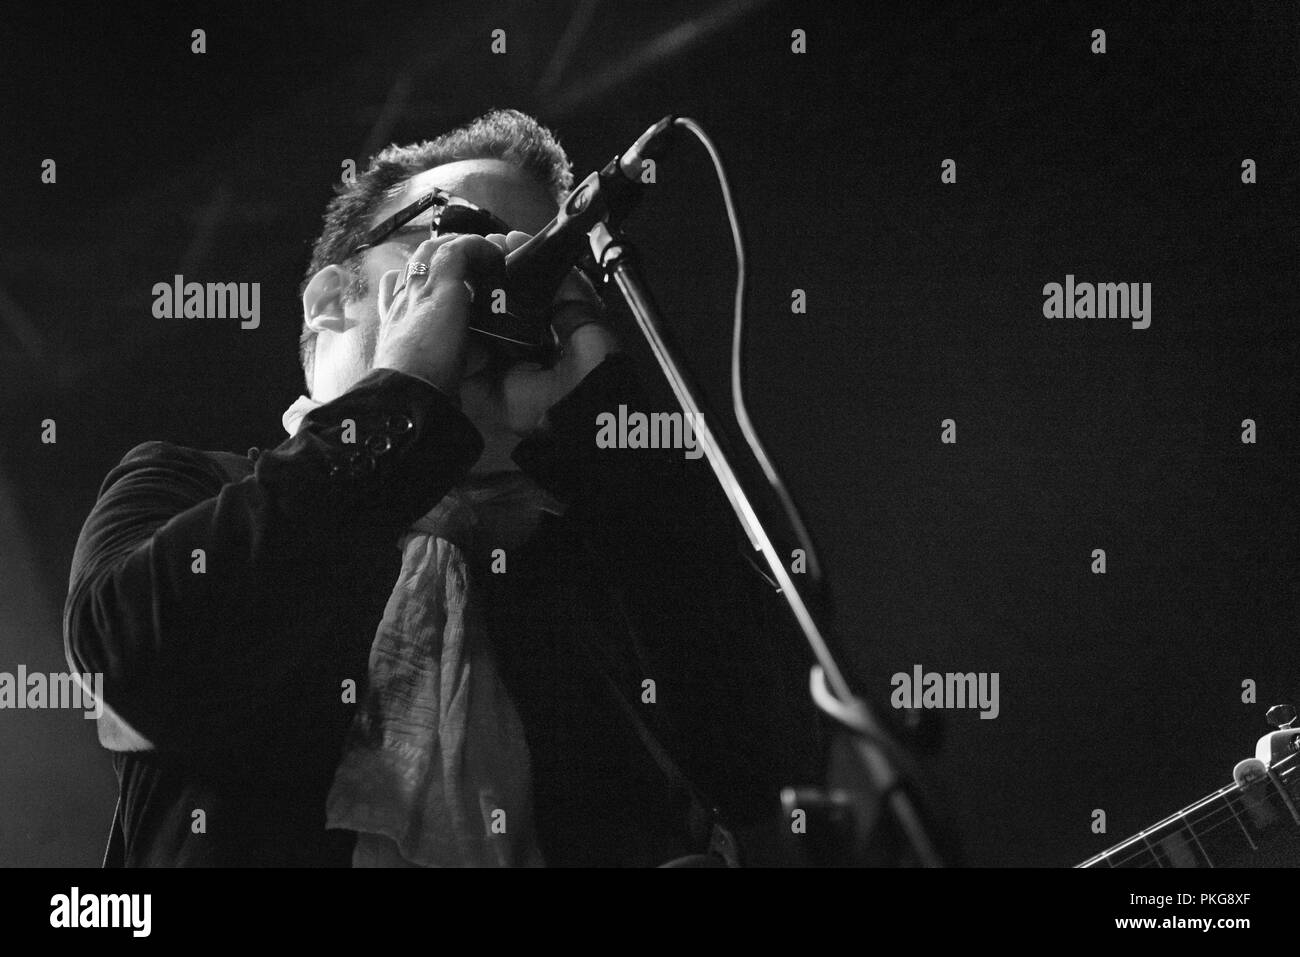 Milan, Italy - September 12, 2018: American indie rock band Mercury Rev performs at Serraglio Music Club. Brambilla Simone Live News photographer Credit: Simone Brambilla/Alamy Live News Stock Photo